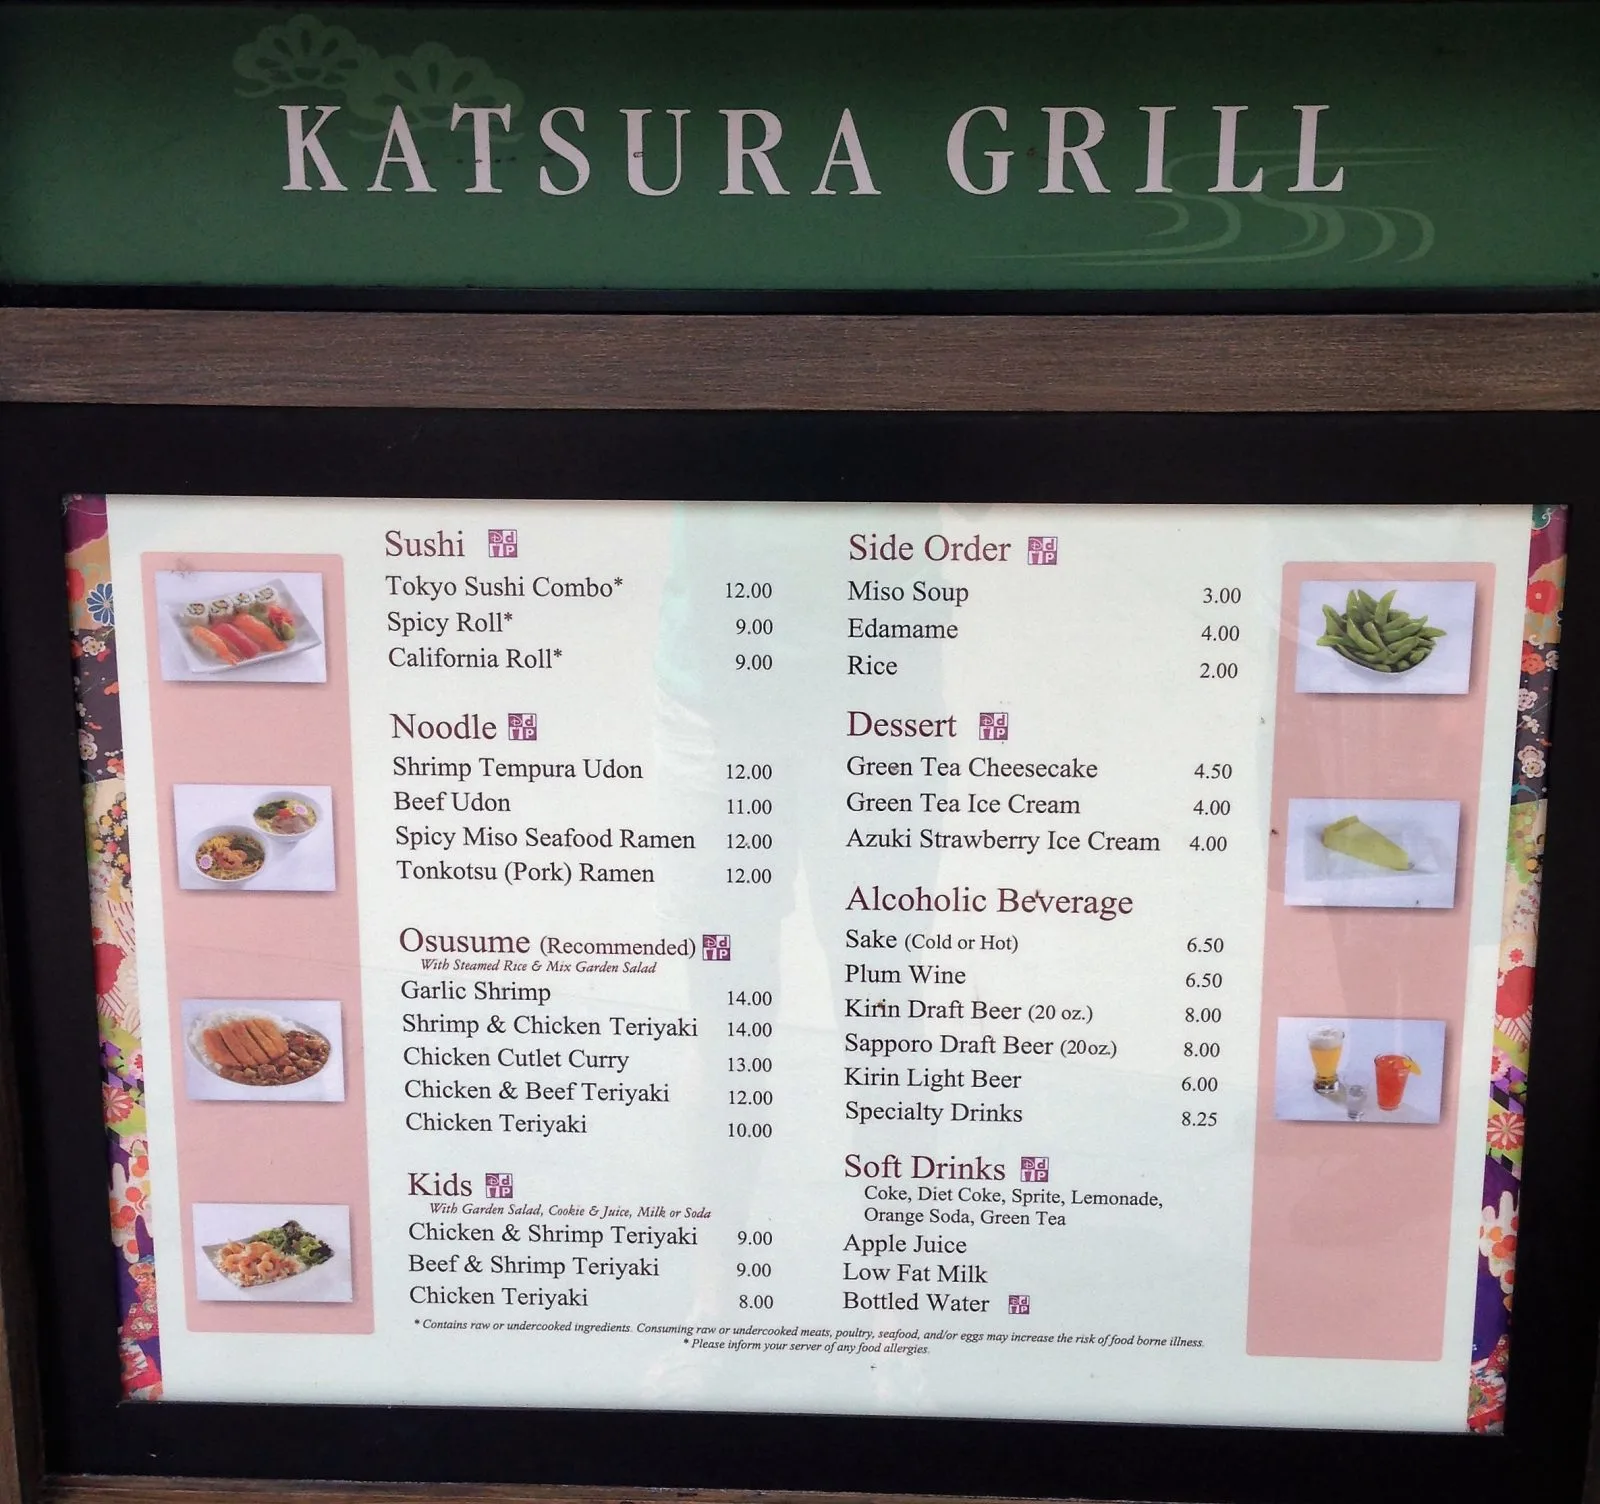 katsura grill menu sign with food photos and pricing